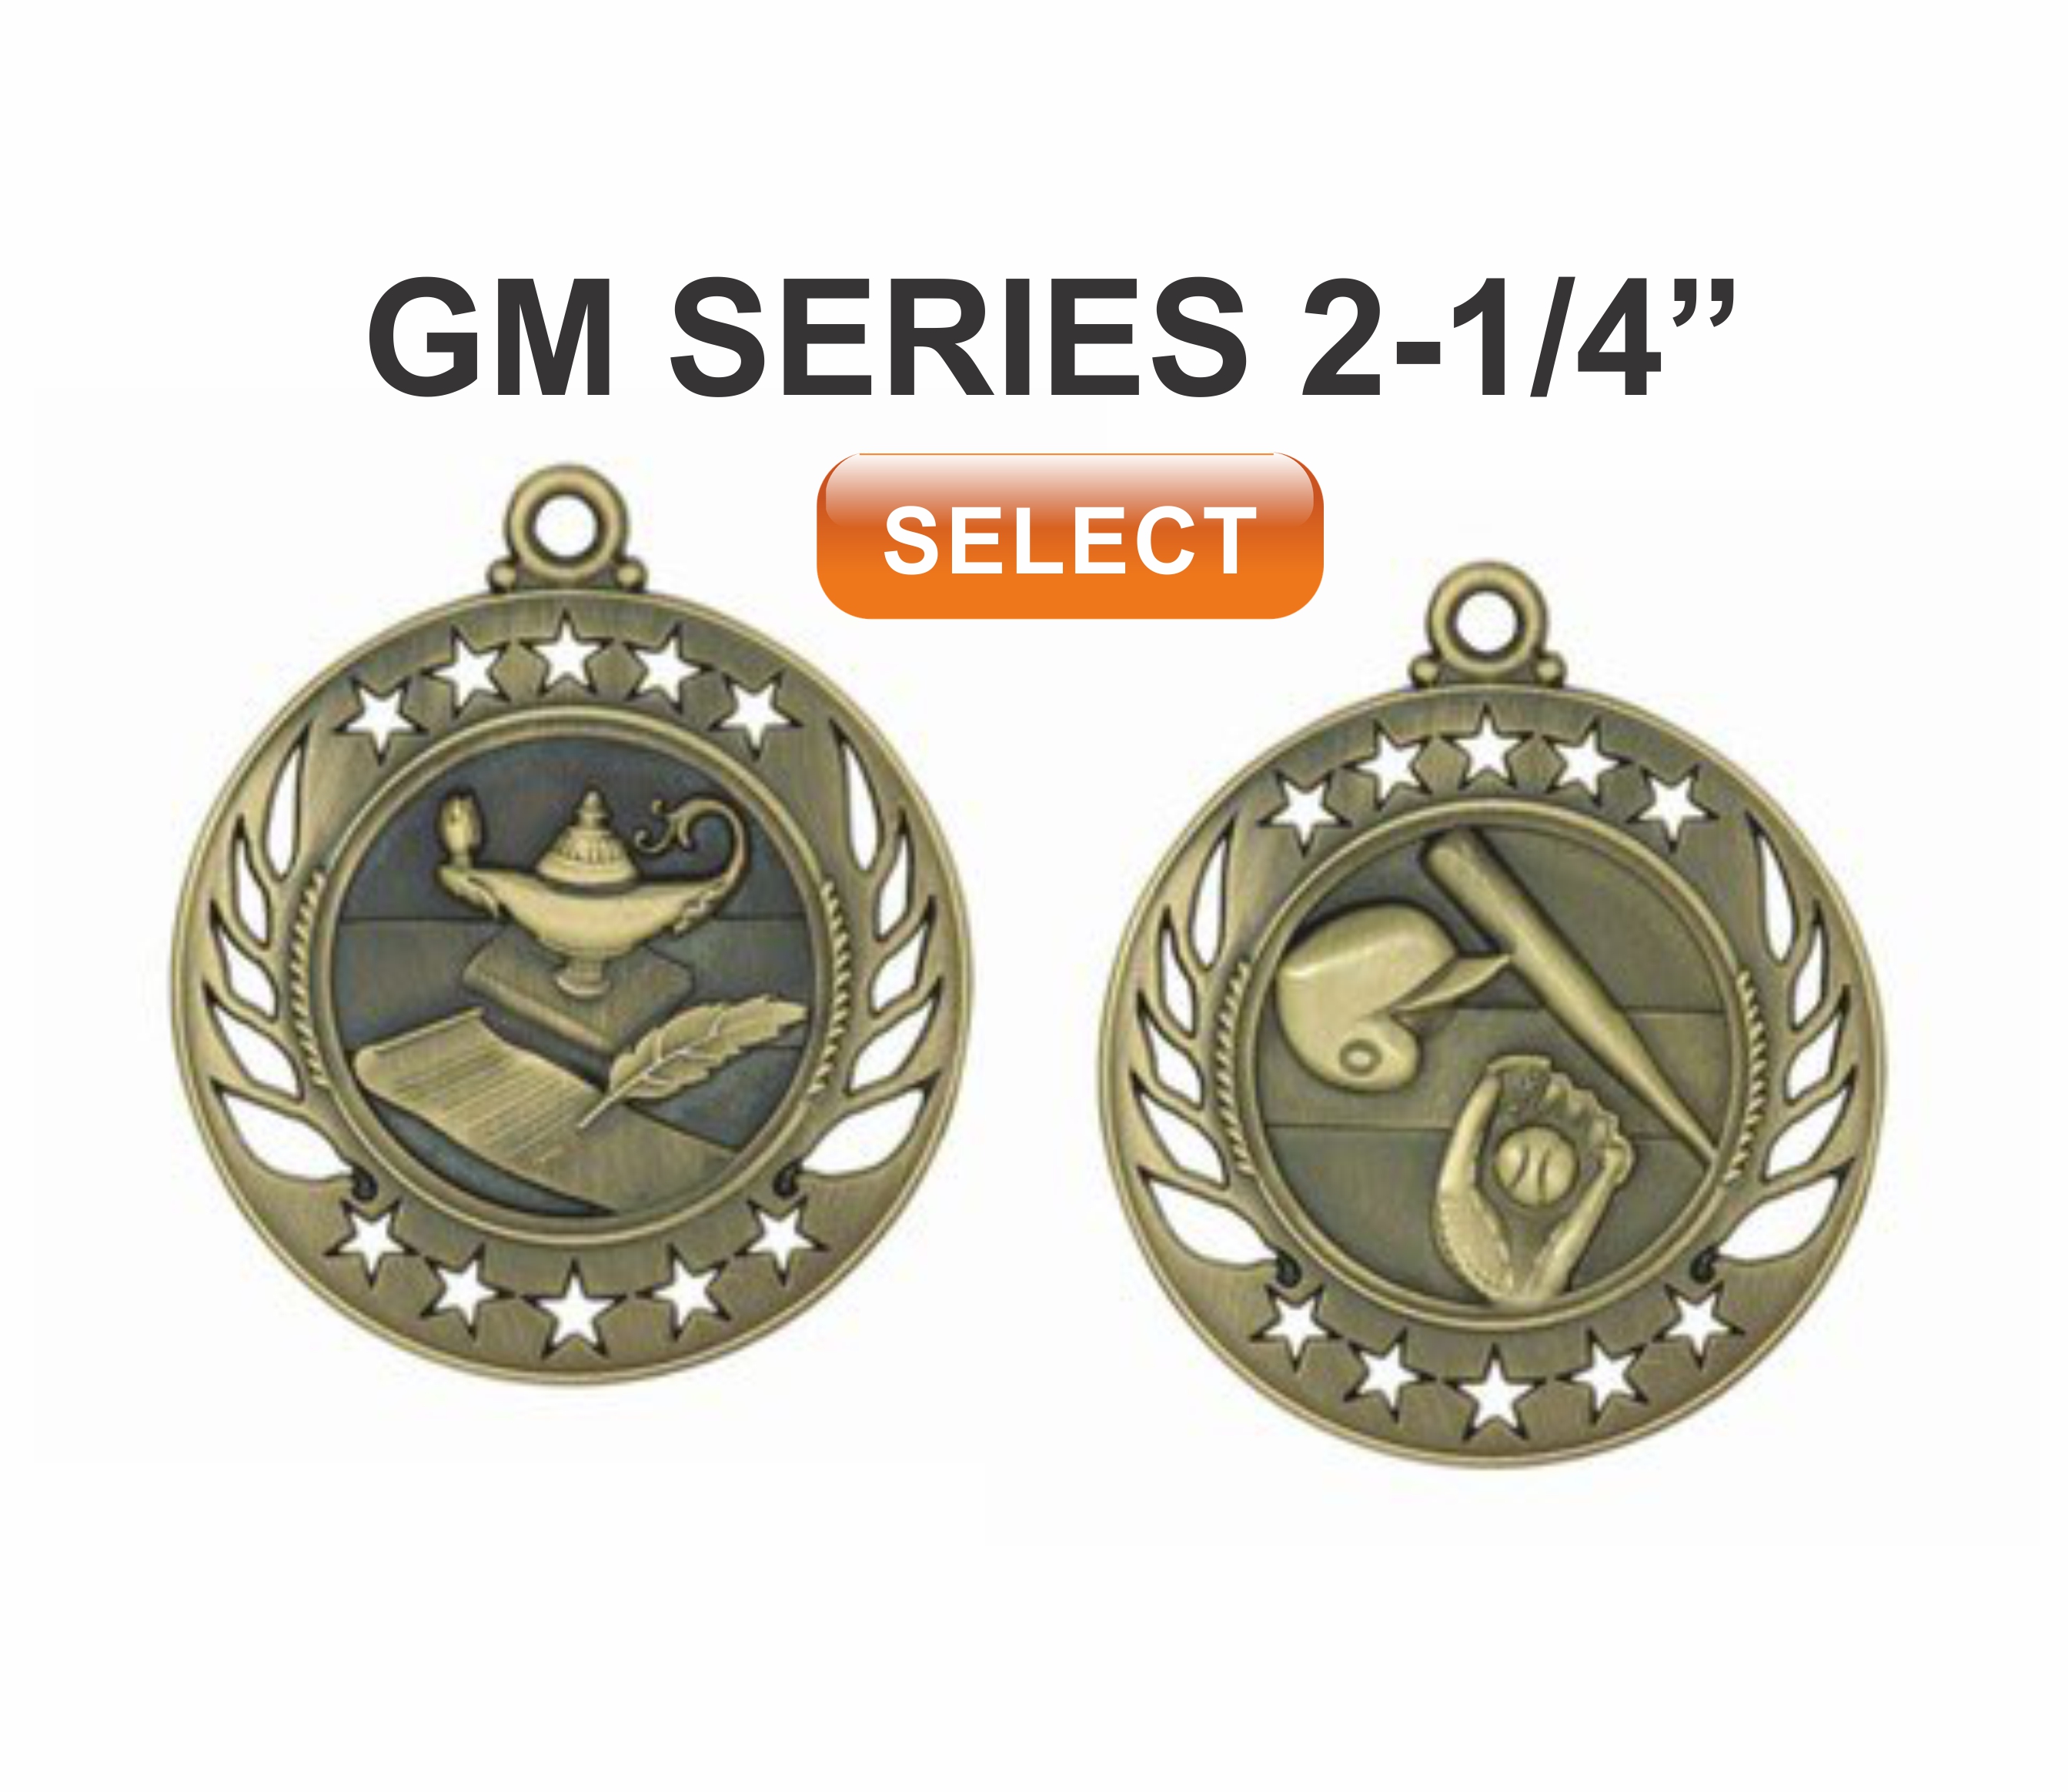 GM series award medals